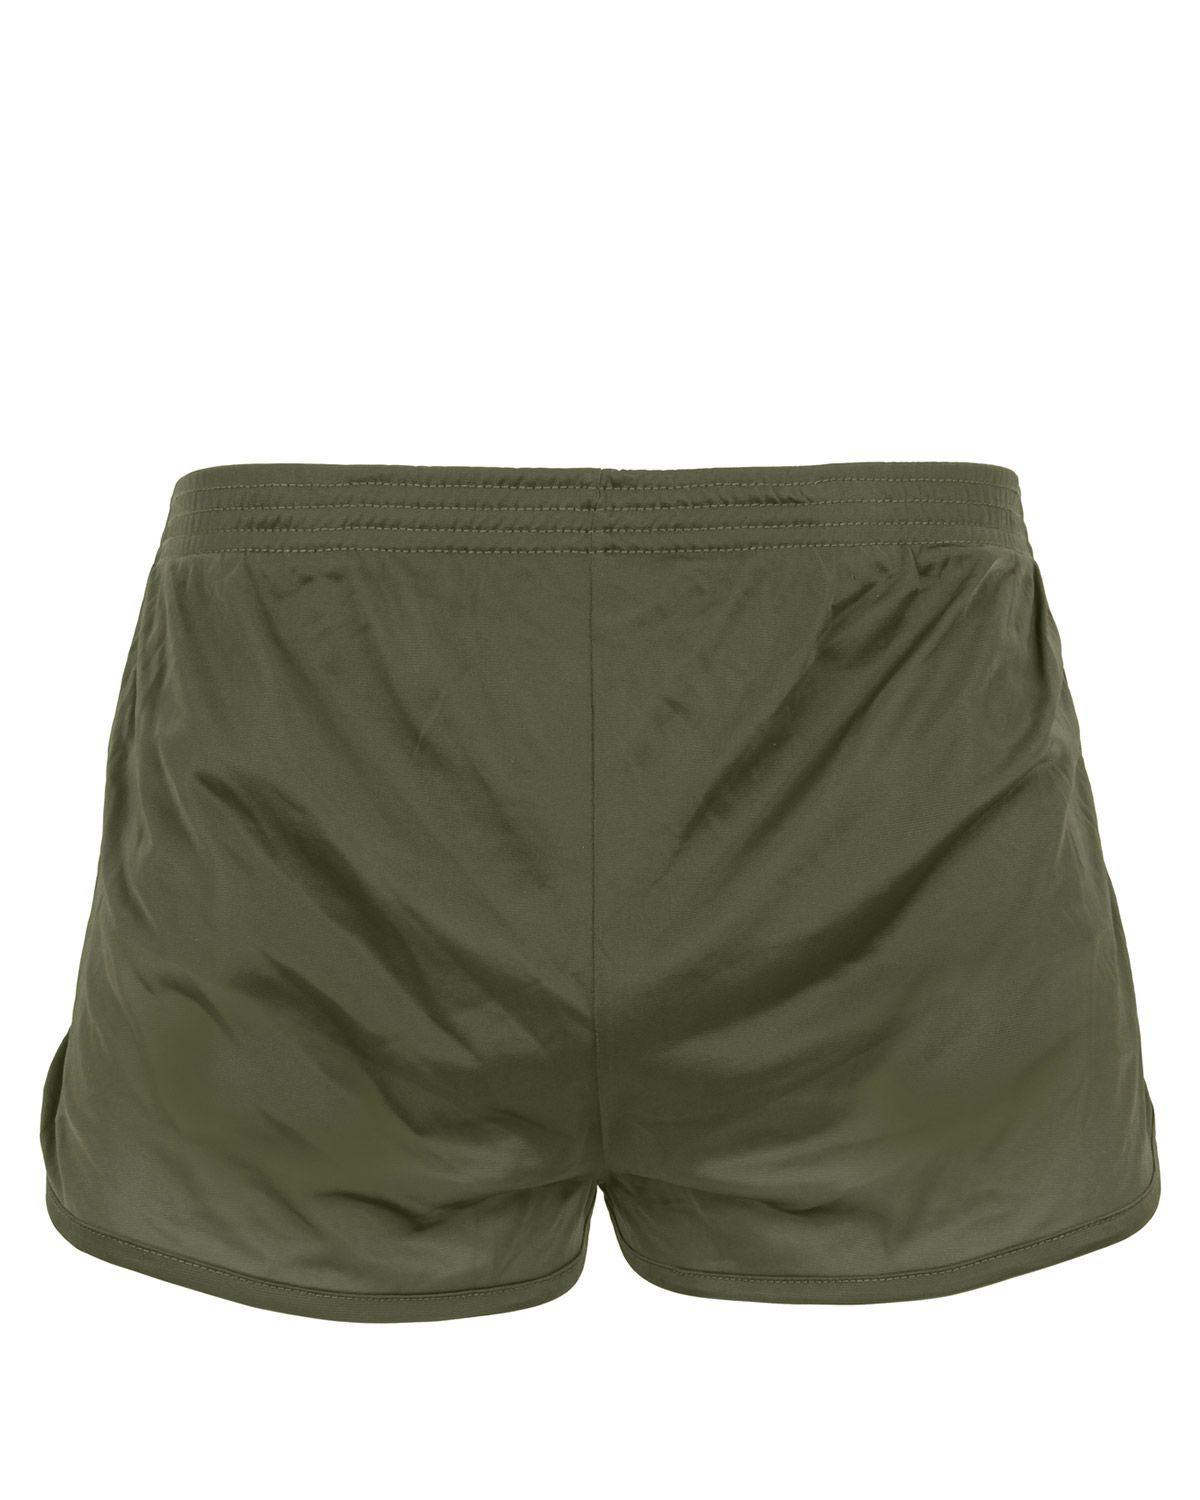 Rothco Ranger P/T Shorts (Oliven, L)